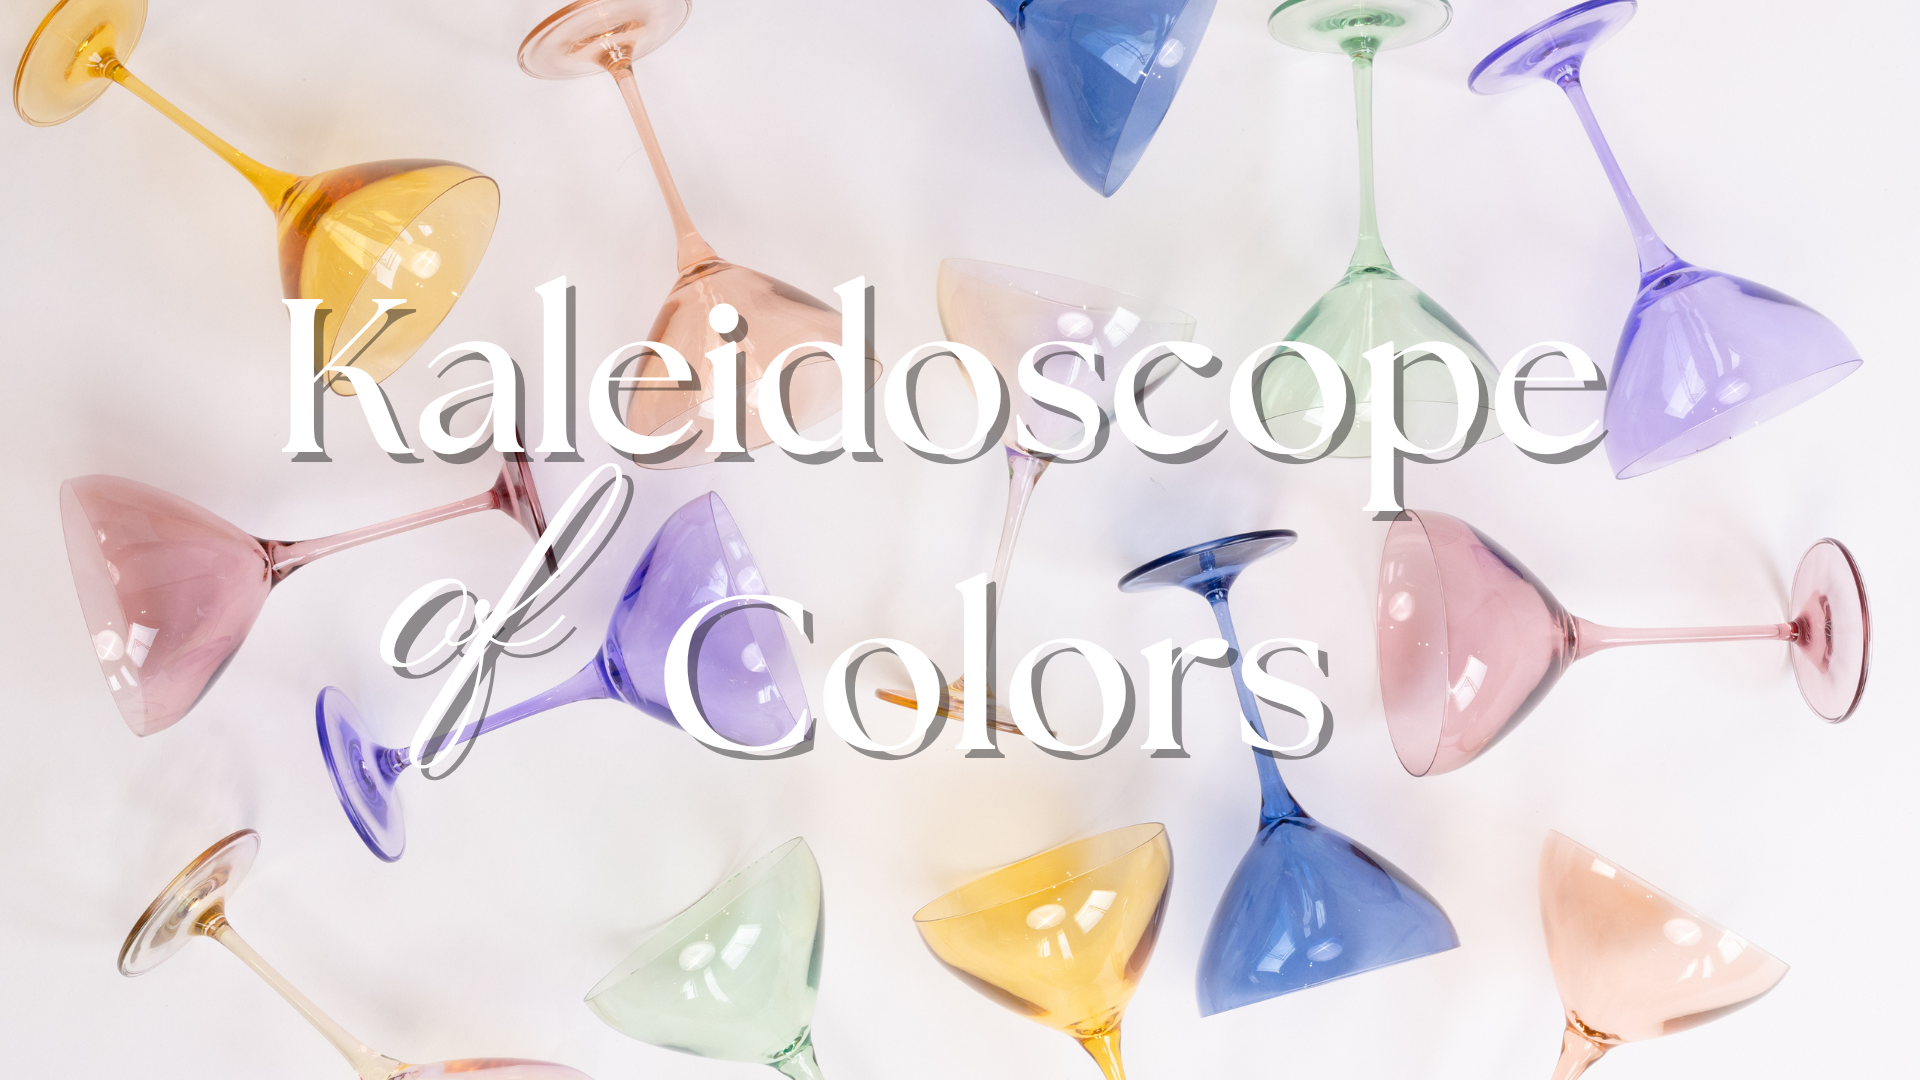 Kaleidoscope of Colors